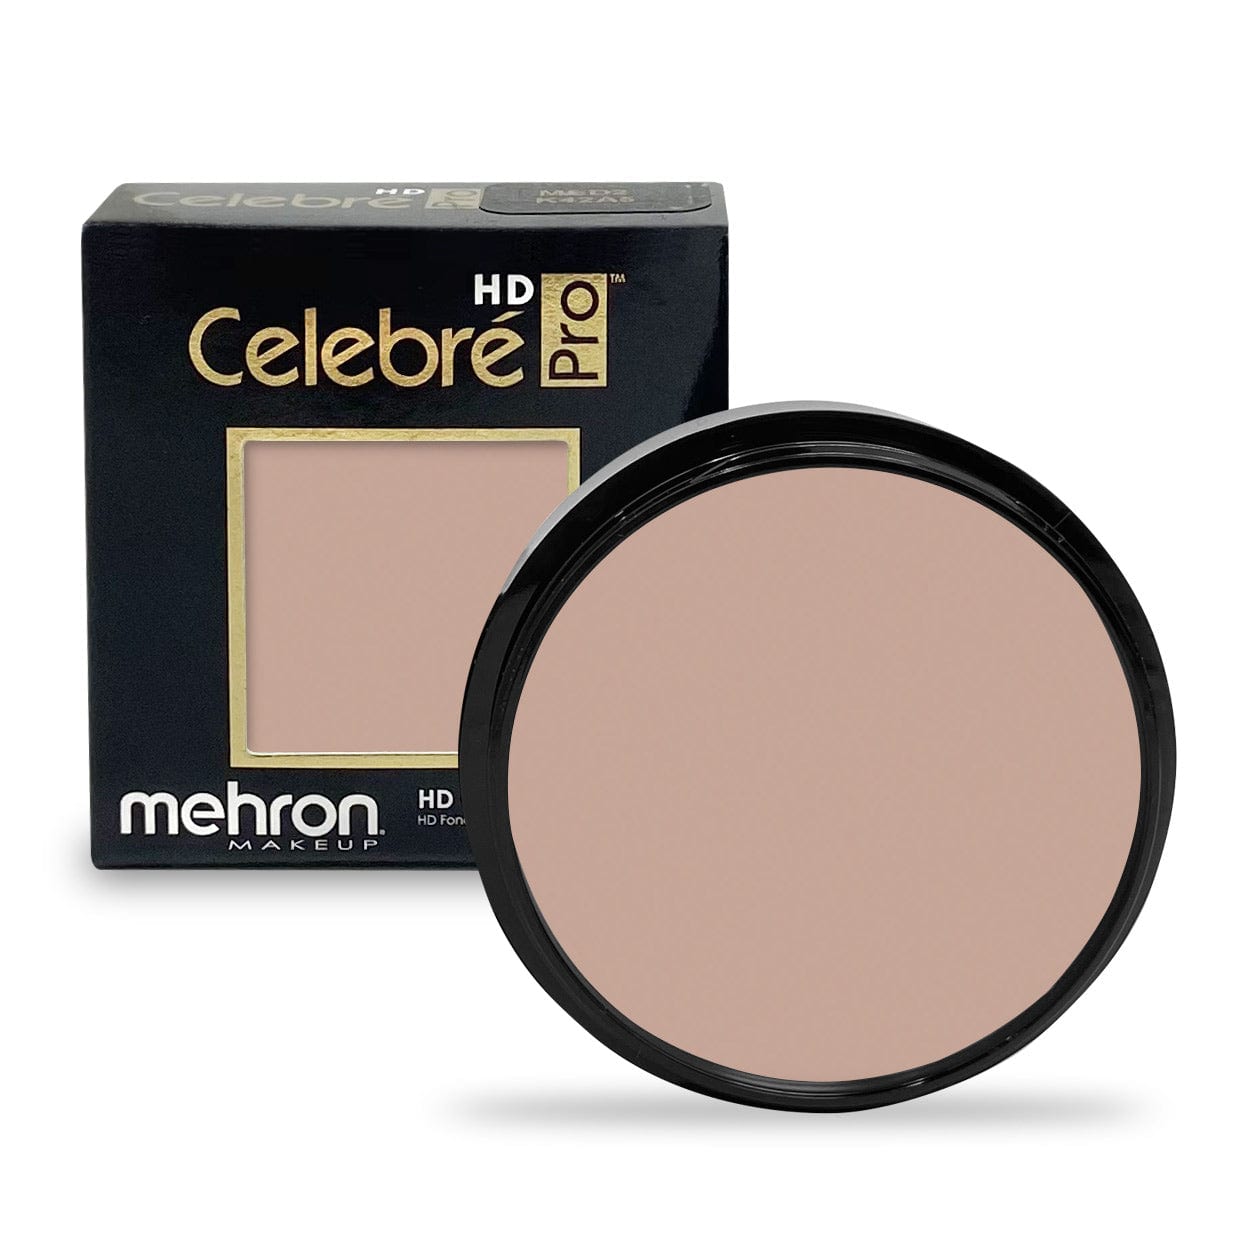 Mehron Celebre Pro HD-Cream 25g - OS8 MDK Olive - Mehron